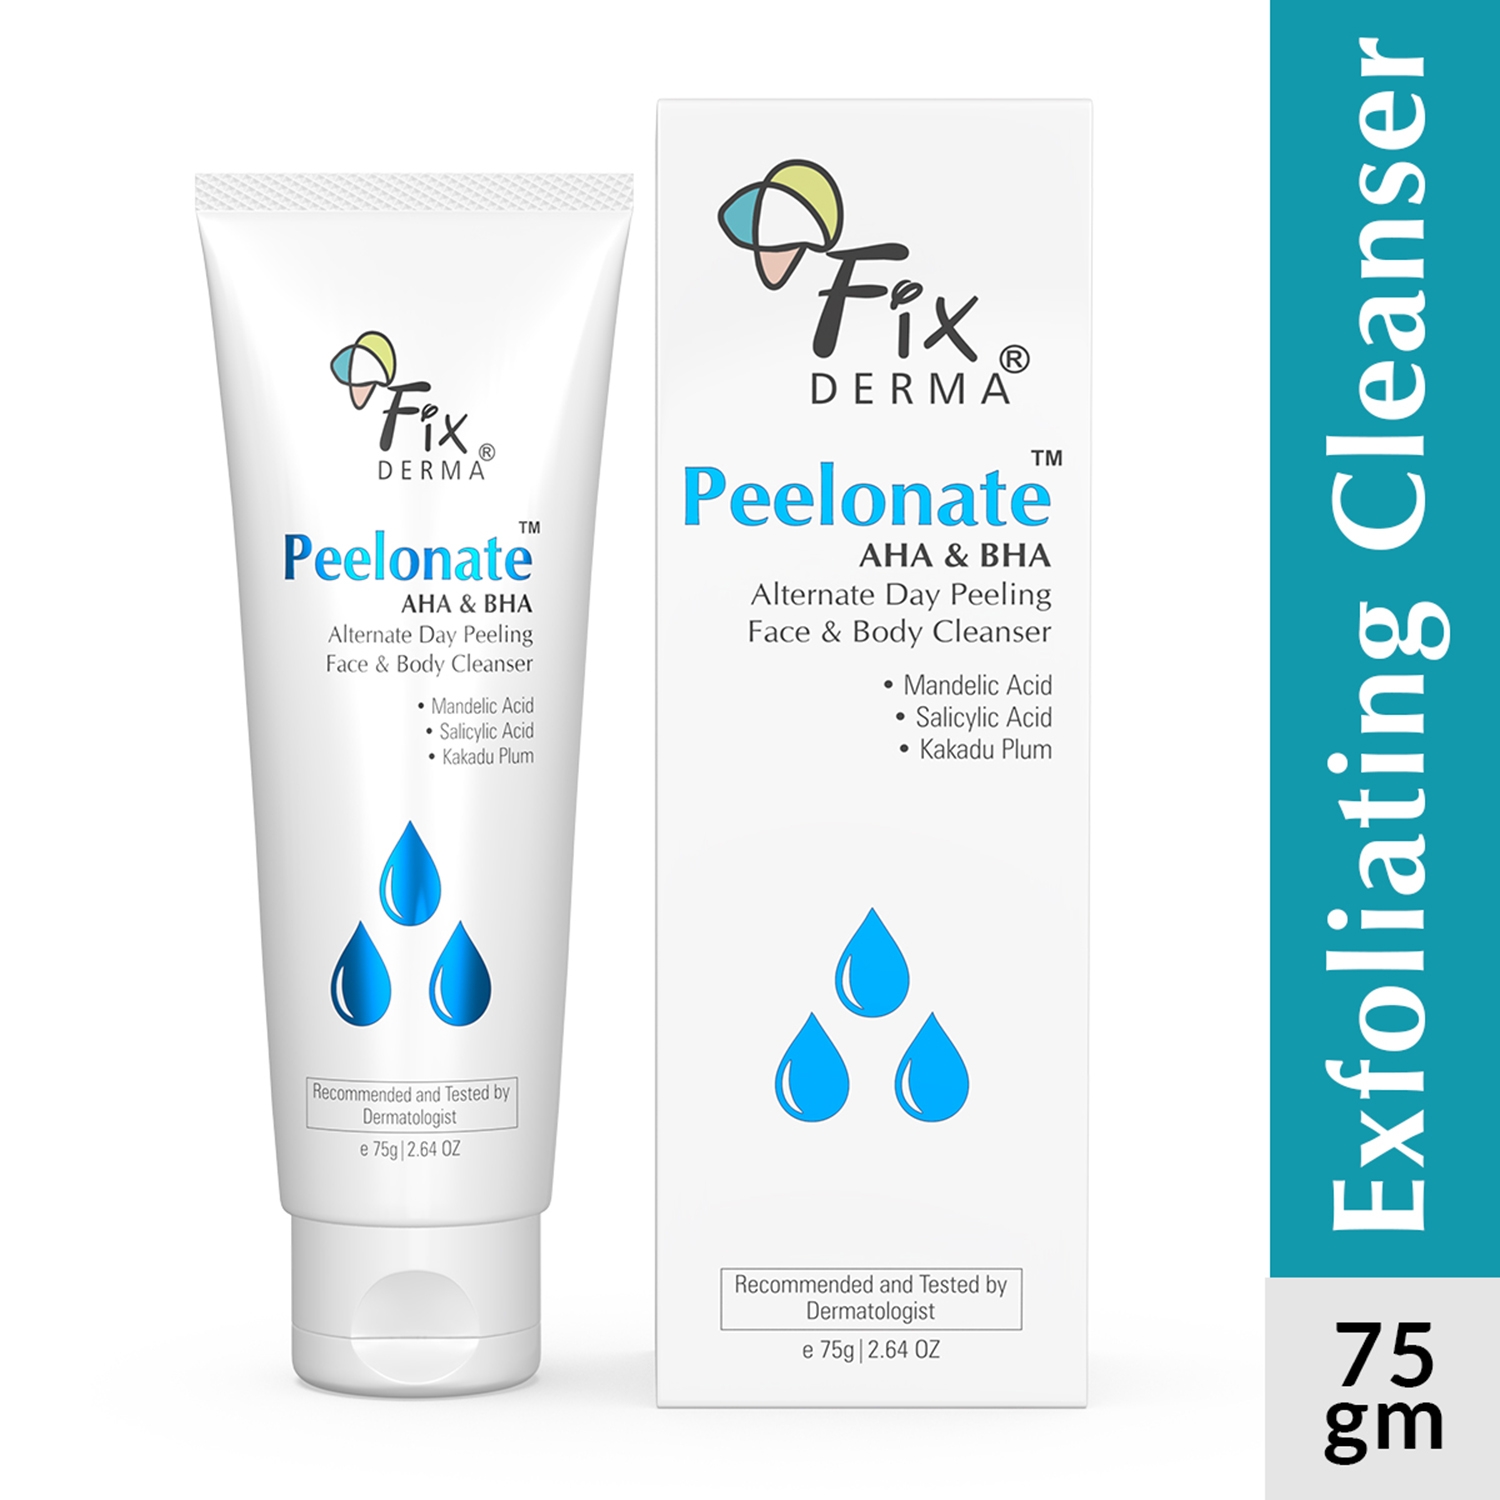 Fixderma | Fixderma 2% Mandelic Acid + 1% Salicylic Acid Peelonate AHA & BHA Face & Body Cleanser (75g)